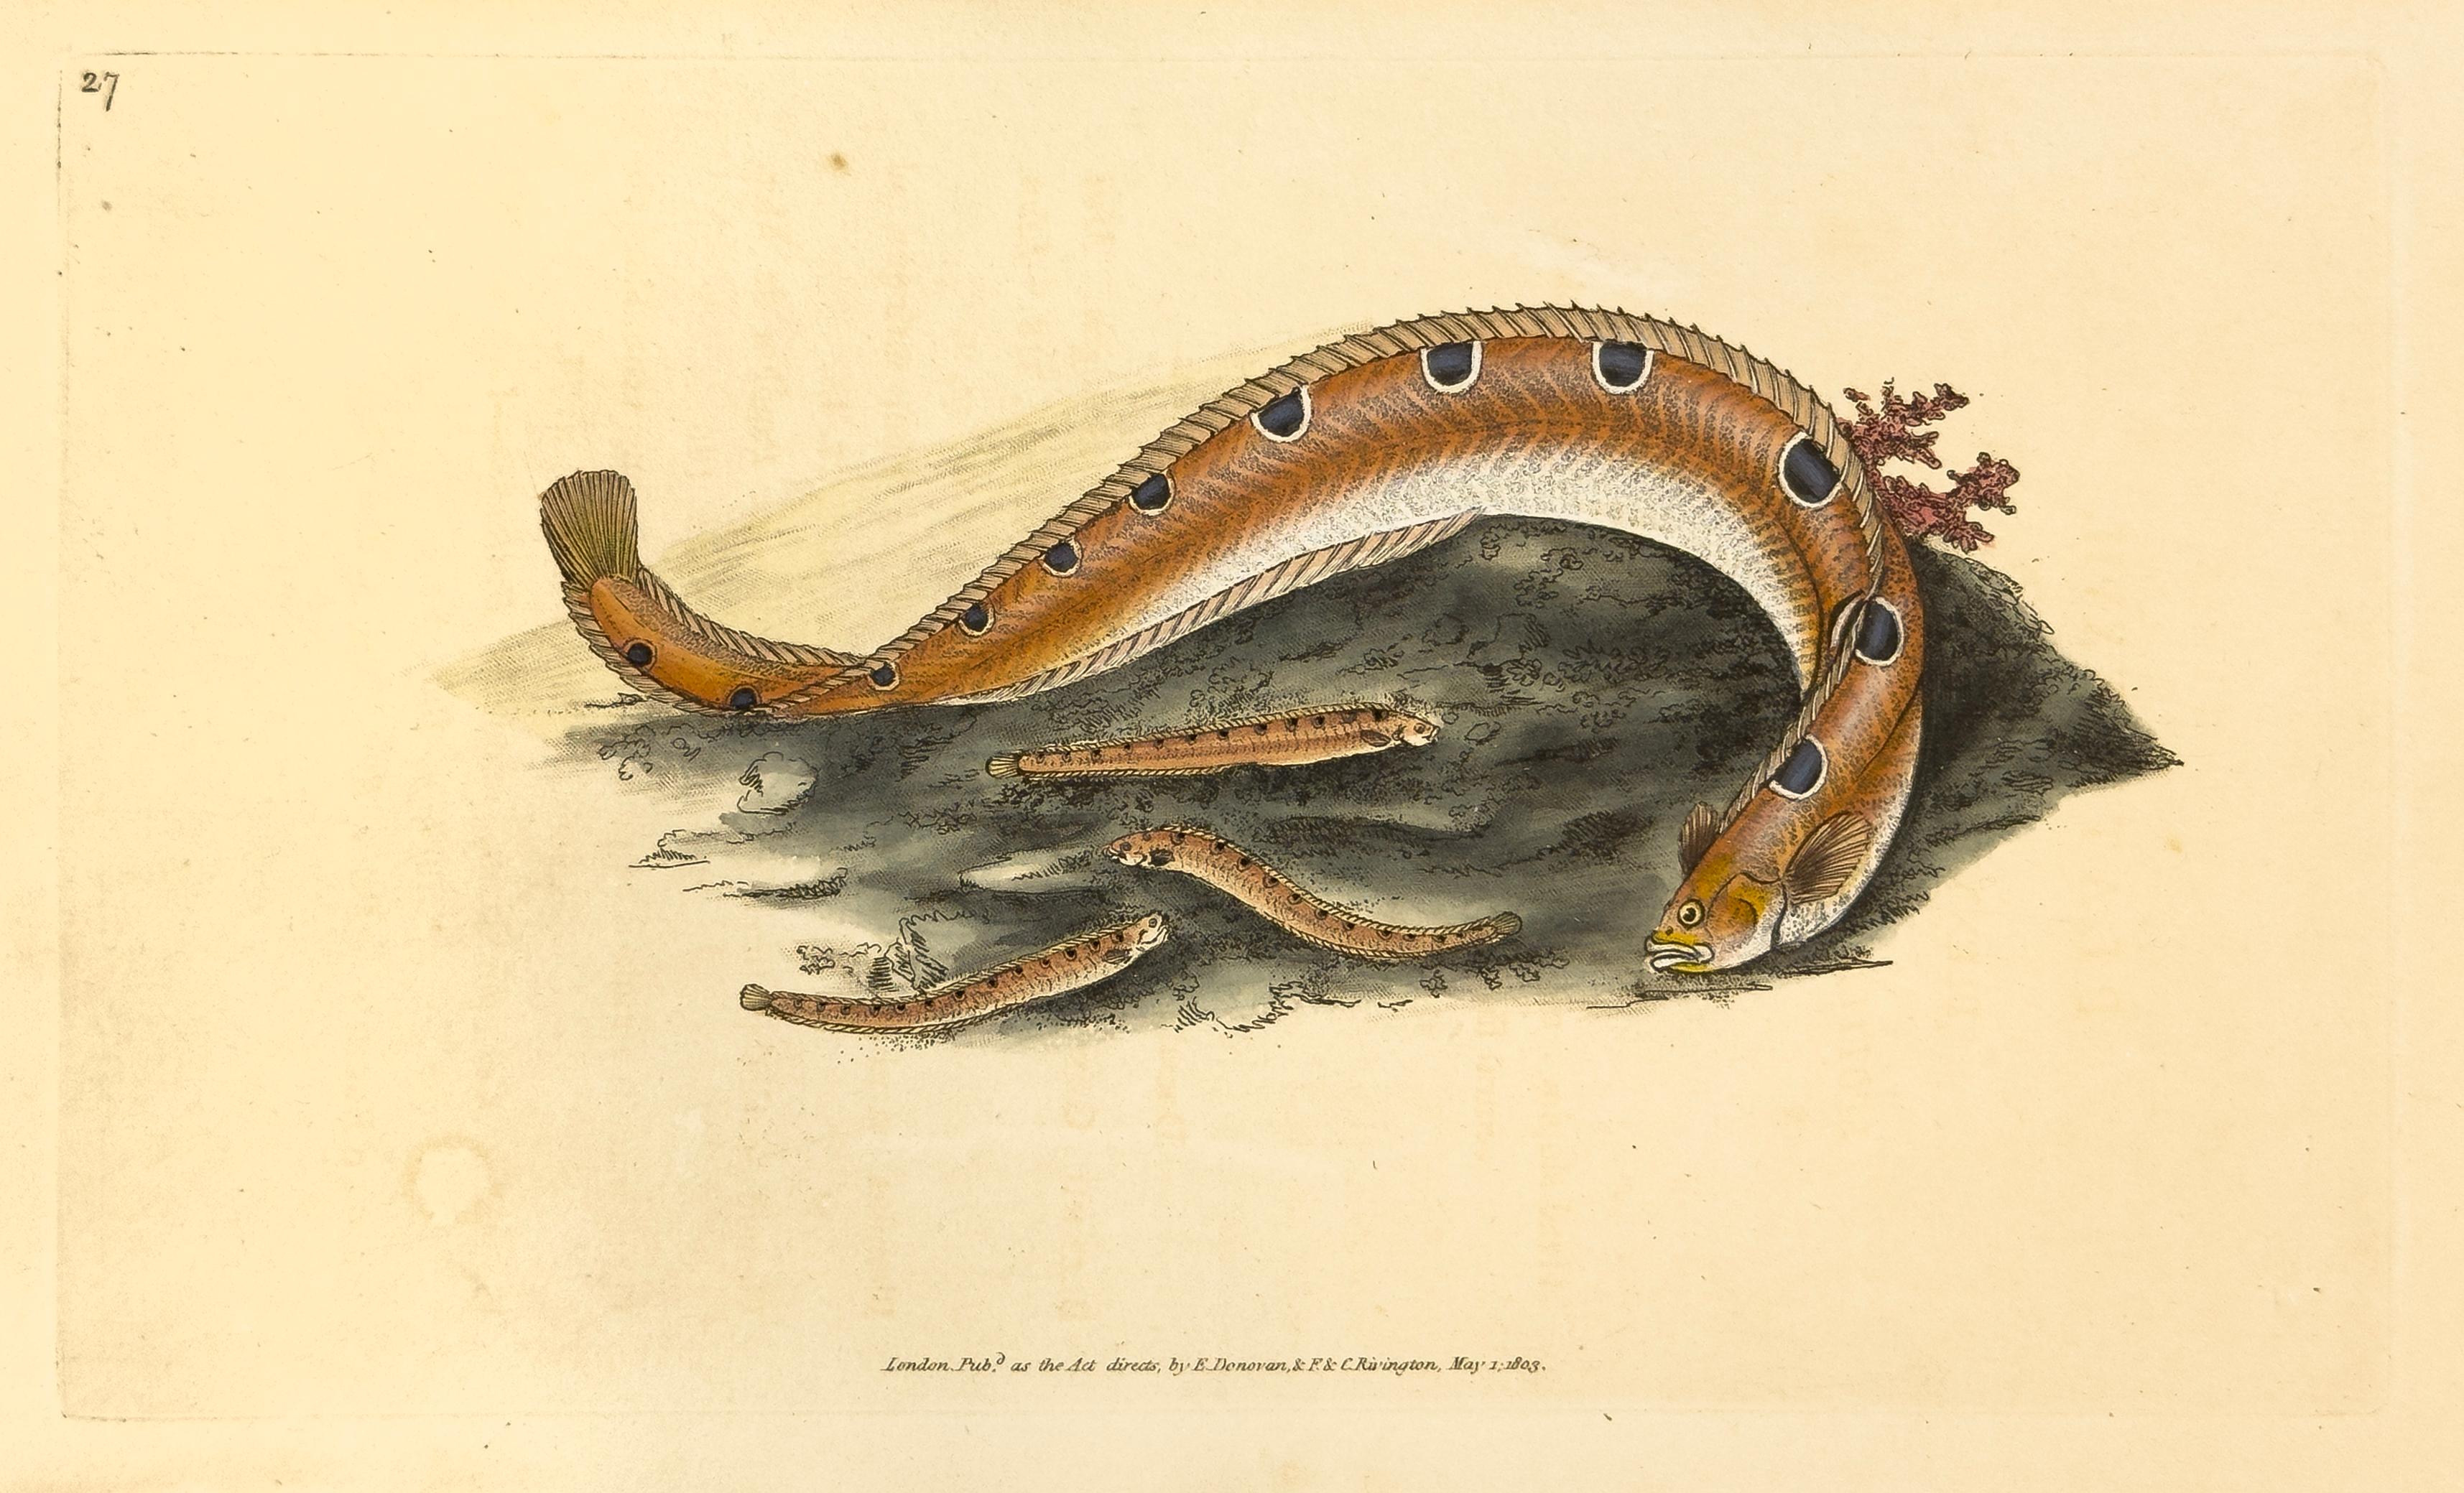 Edward Donovan Animal Print - 27: Blennius gunnellus, Spotted Blenny or Butter Fish